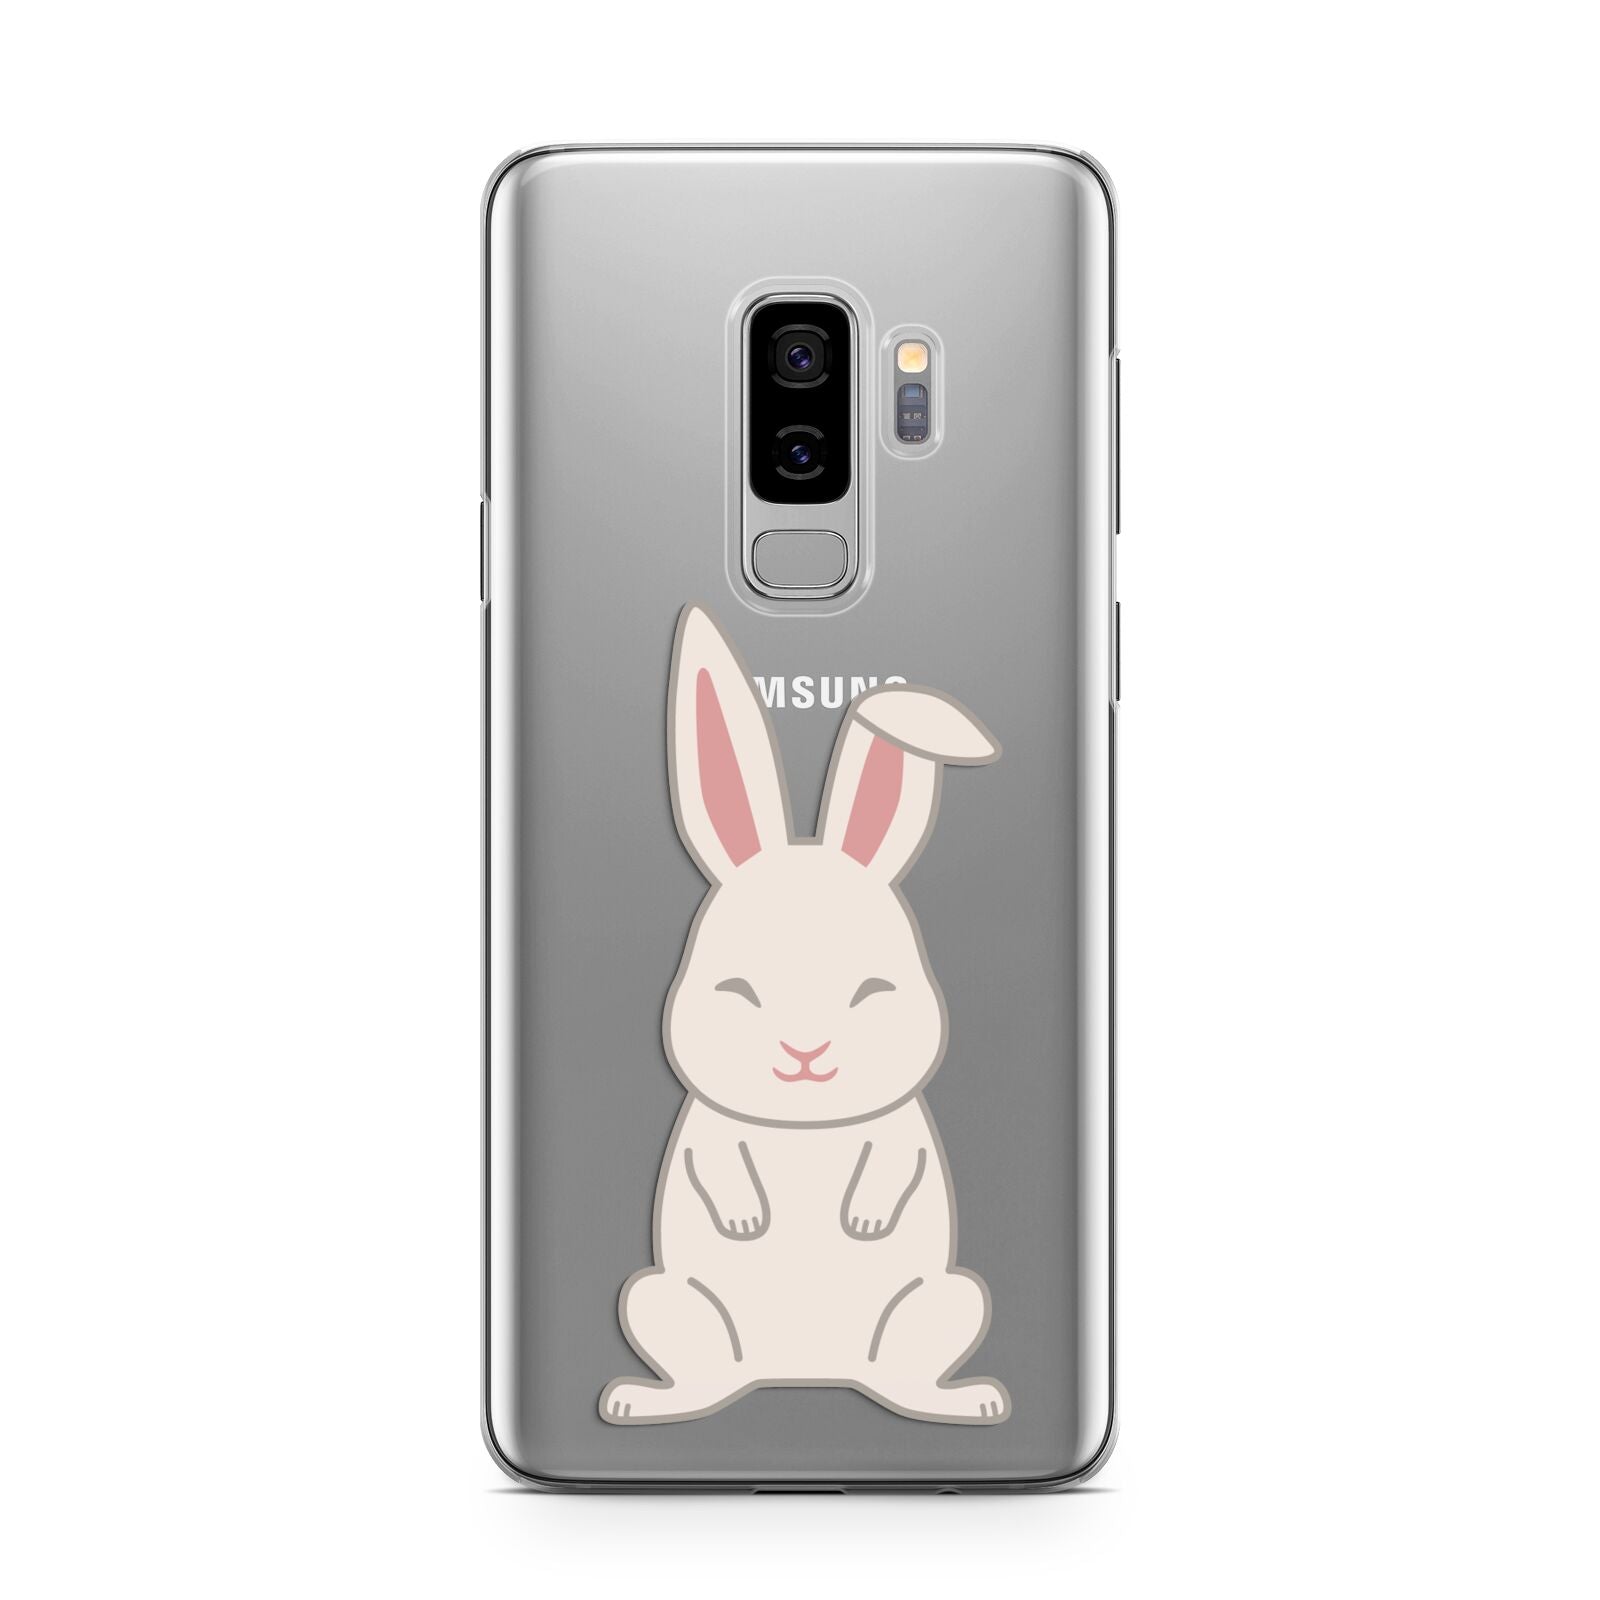 Bunny Samsung Galaxy S9 Plus Case on Silver phone